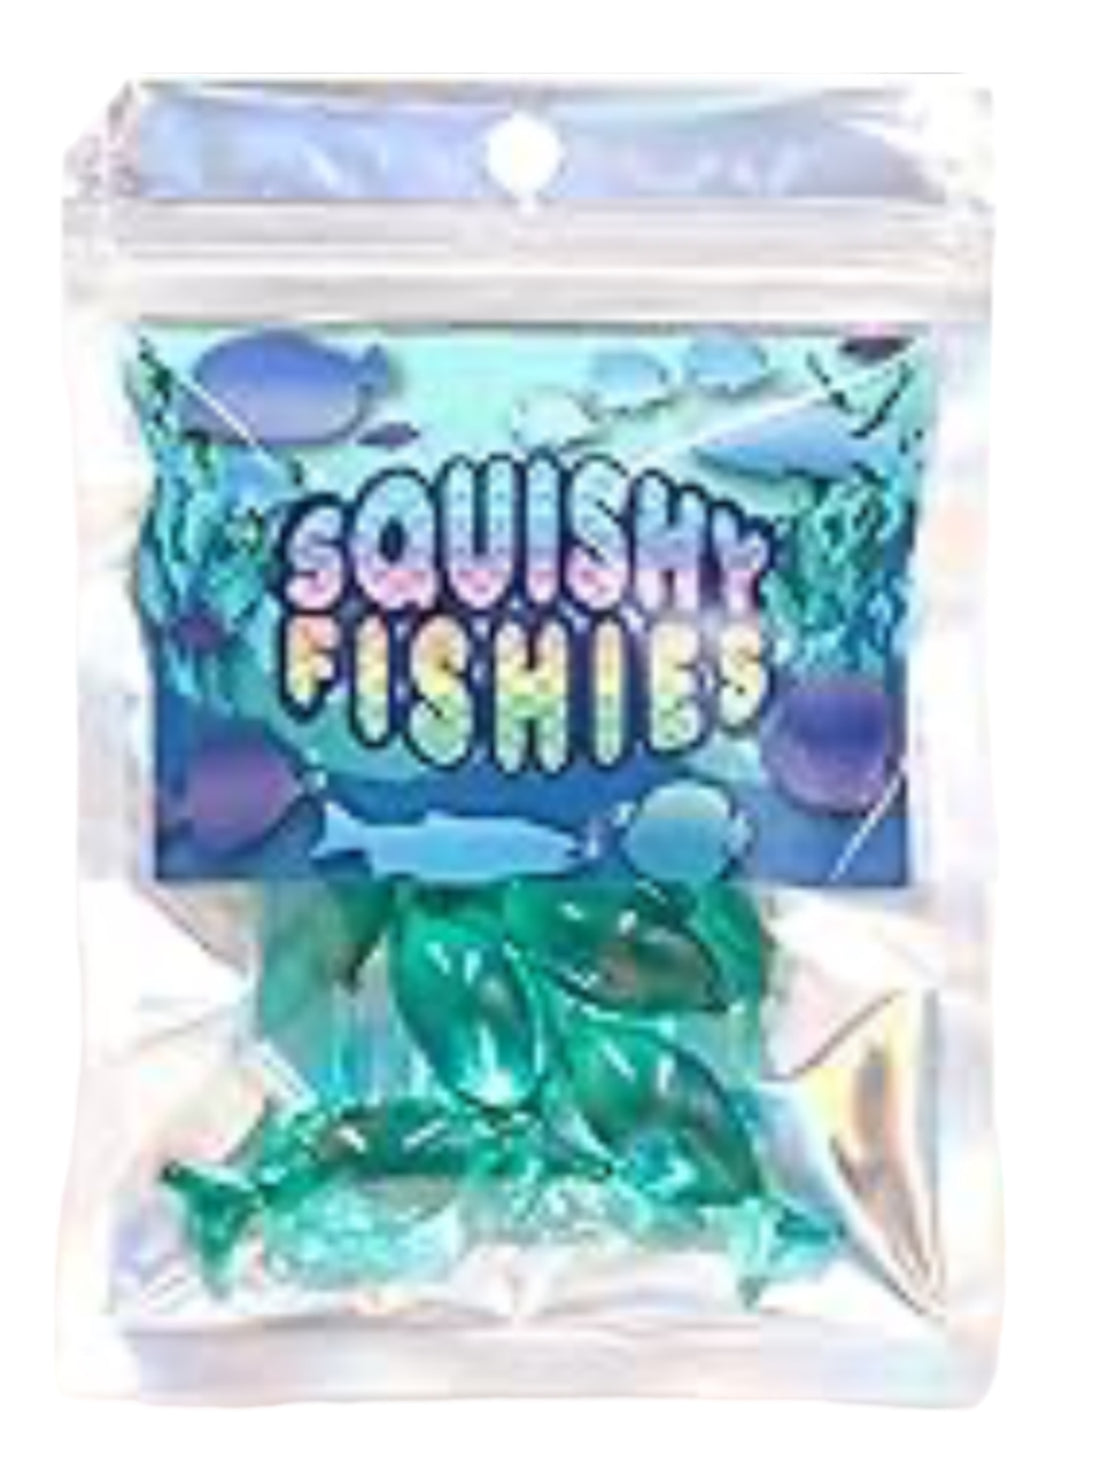 Squishy Fishies Bath Pearls